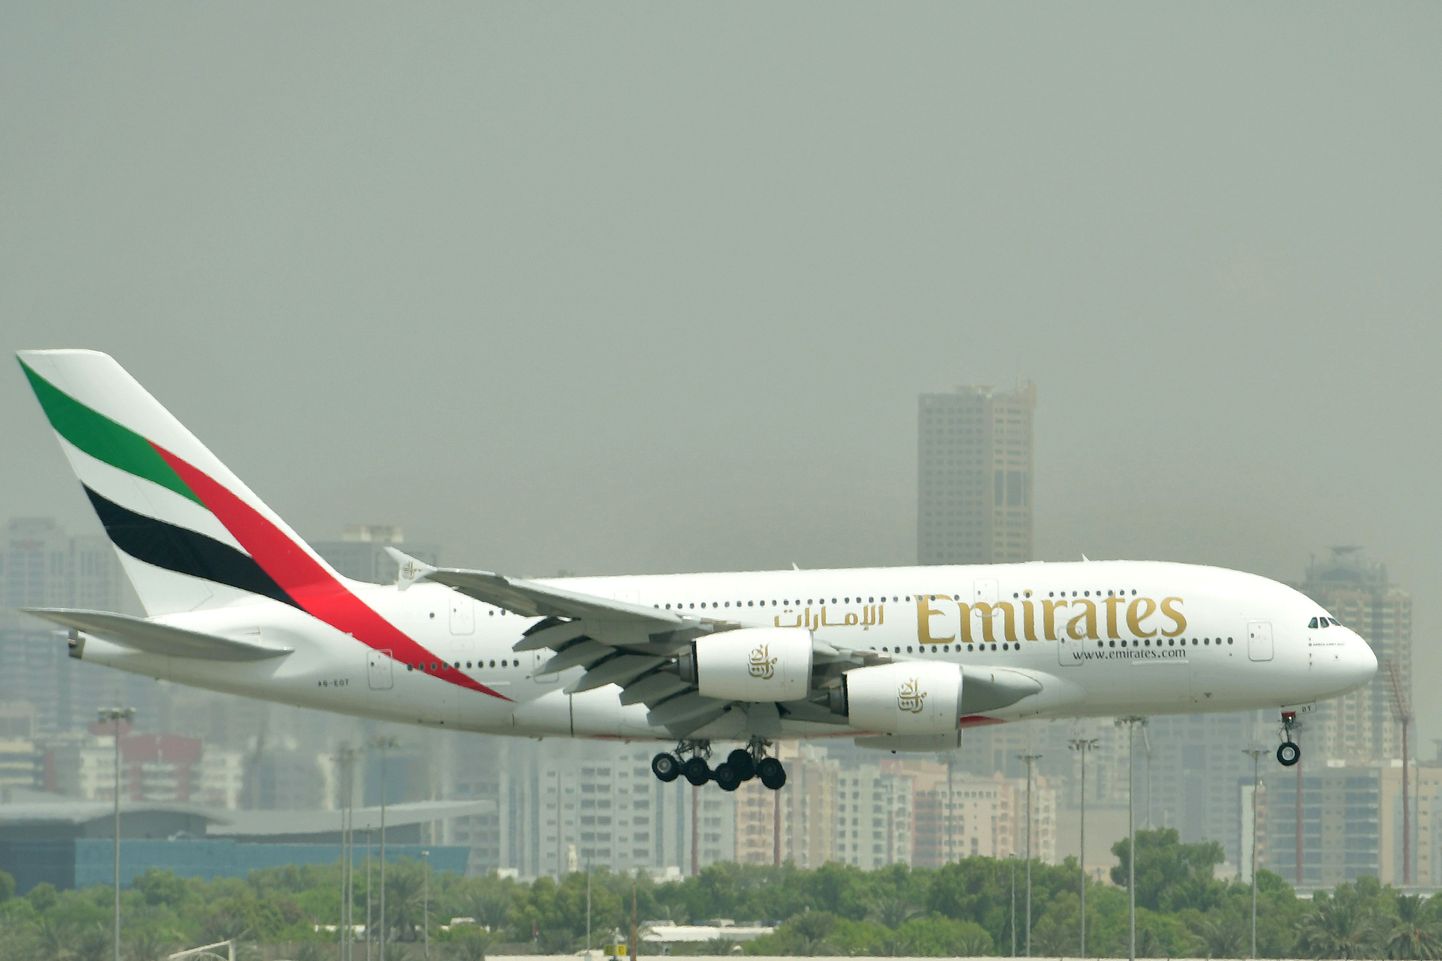 Cамолет авиакомпании Emirates - Airbus A380.